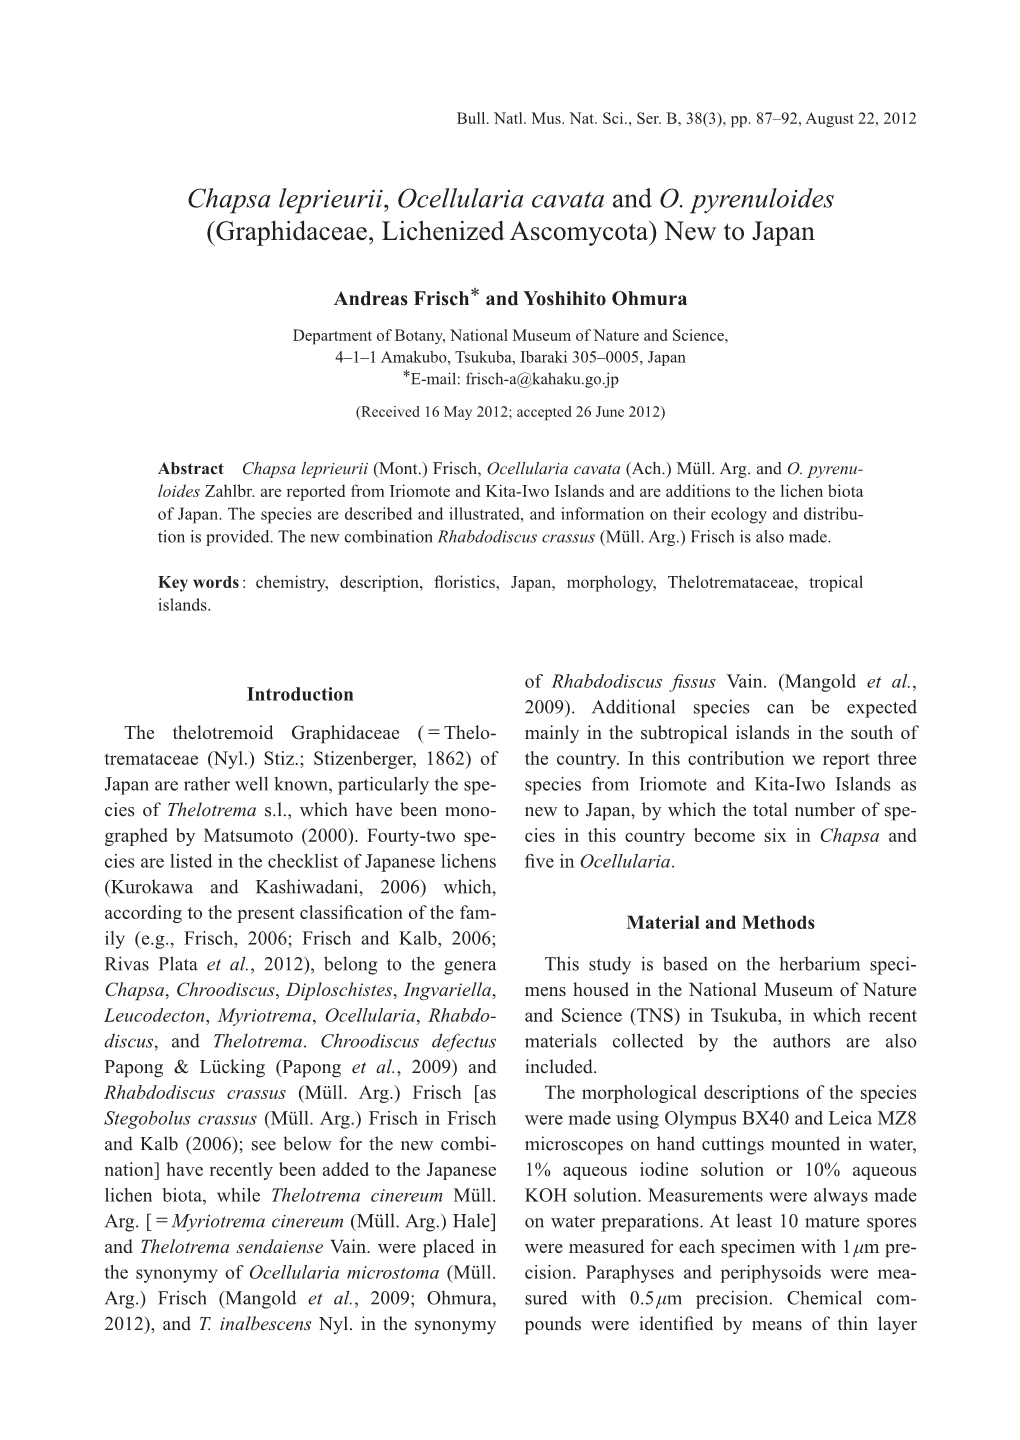 Chapsa Leprieurii, Ocellularia Cavata and O. Pyrenuloides (Graphidaceae, Lichenized Ascomycota) New to Japan